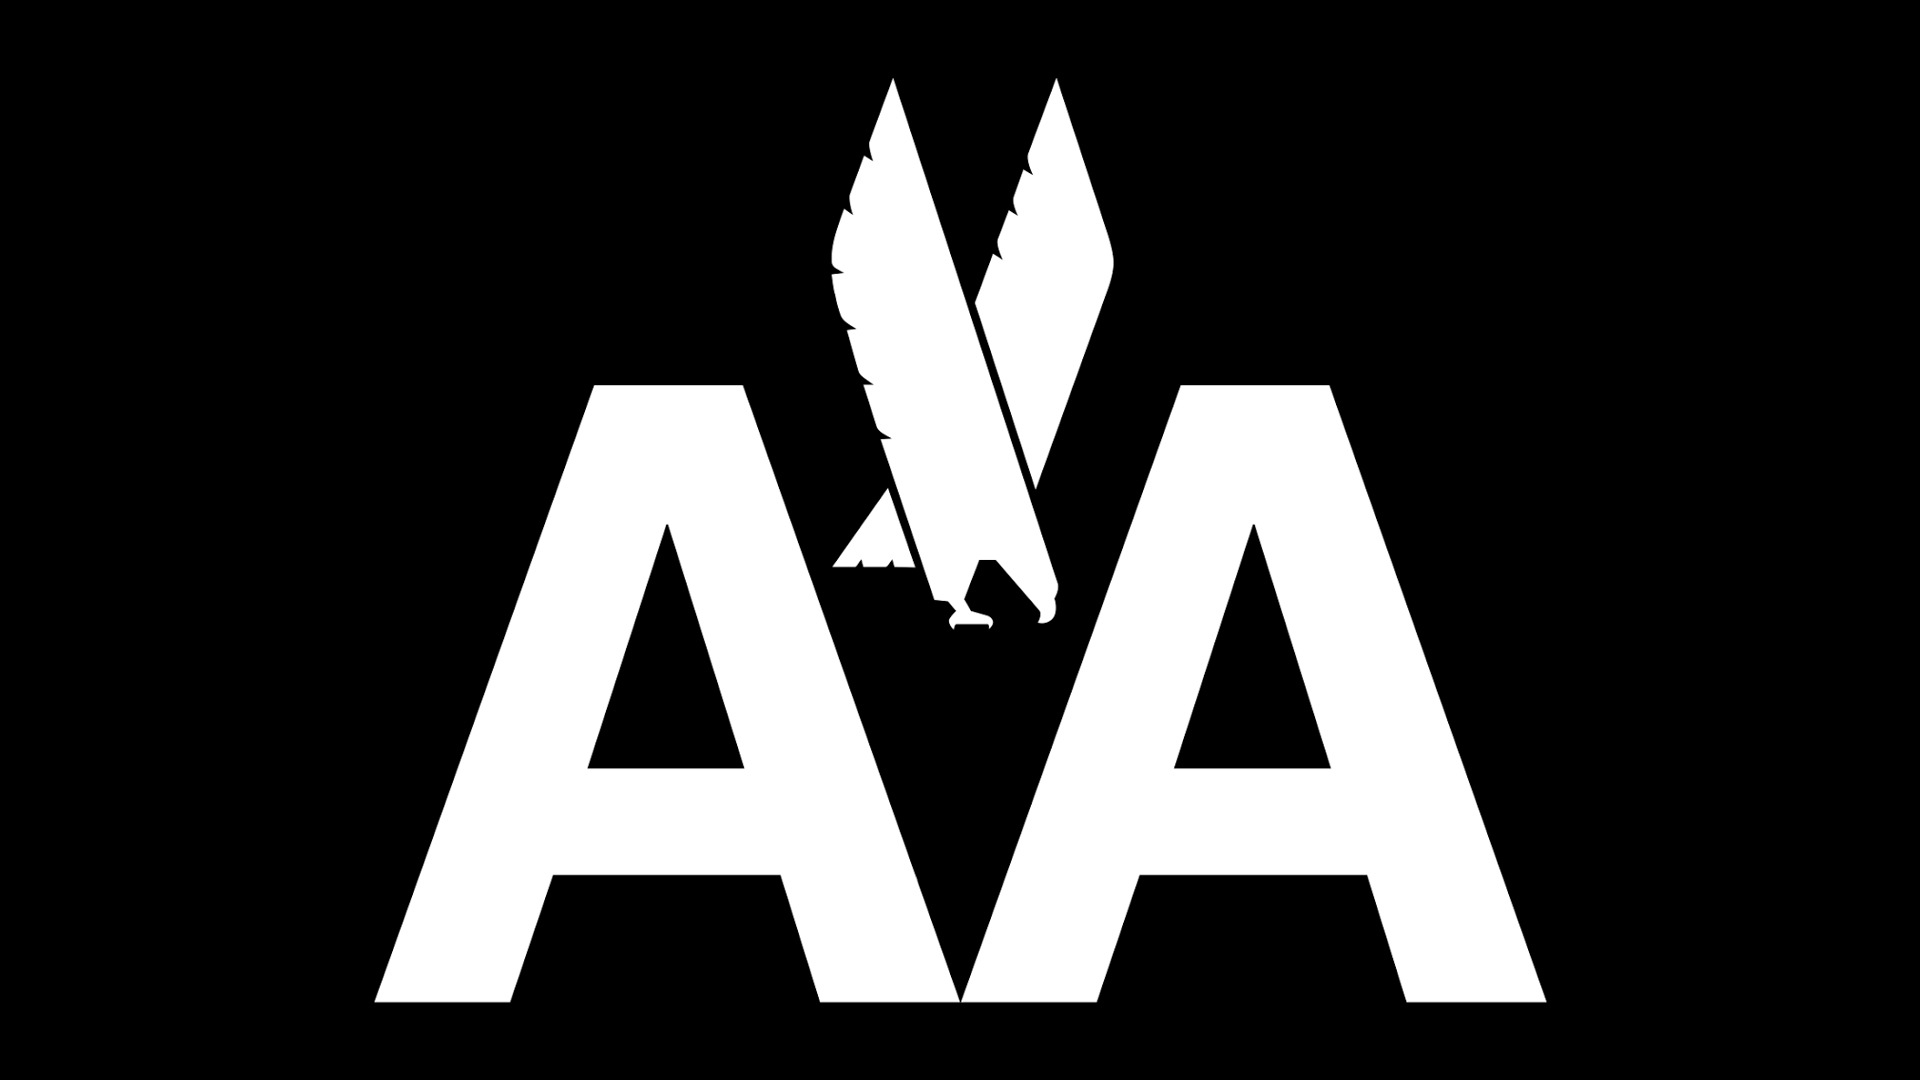 AA logo : histoire, signification et évolution, symbole